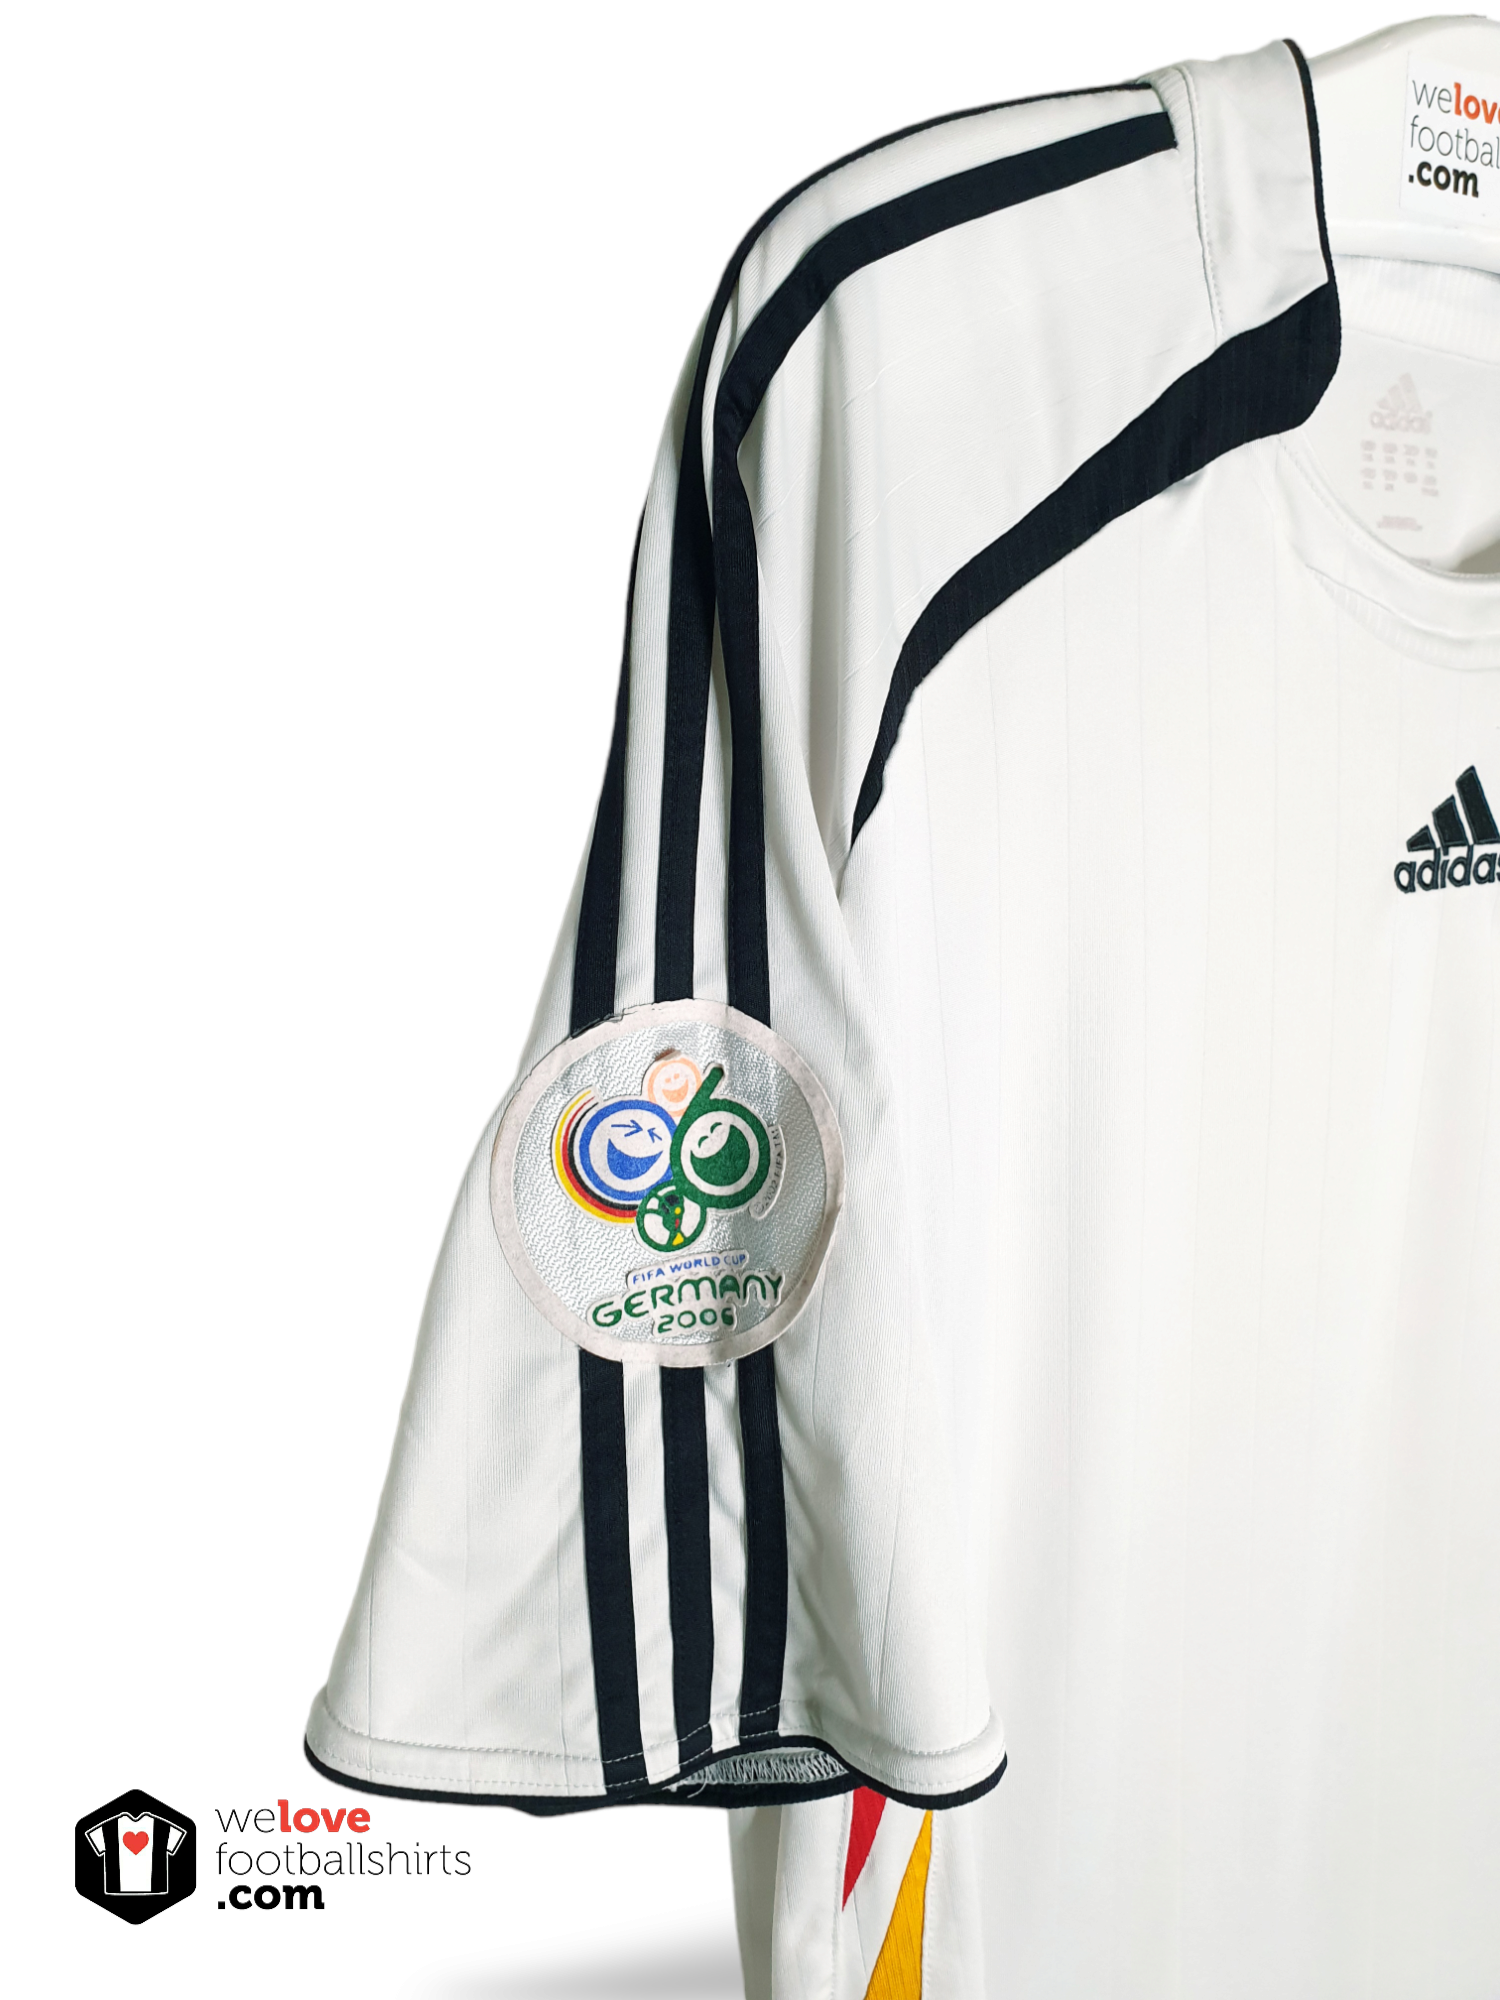 Adidas Original Adidas football shirt Germany World Cup 2006